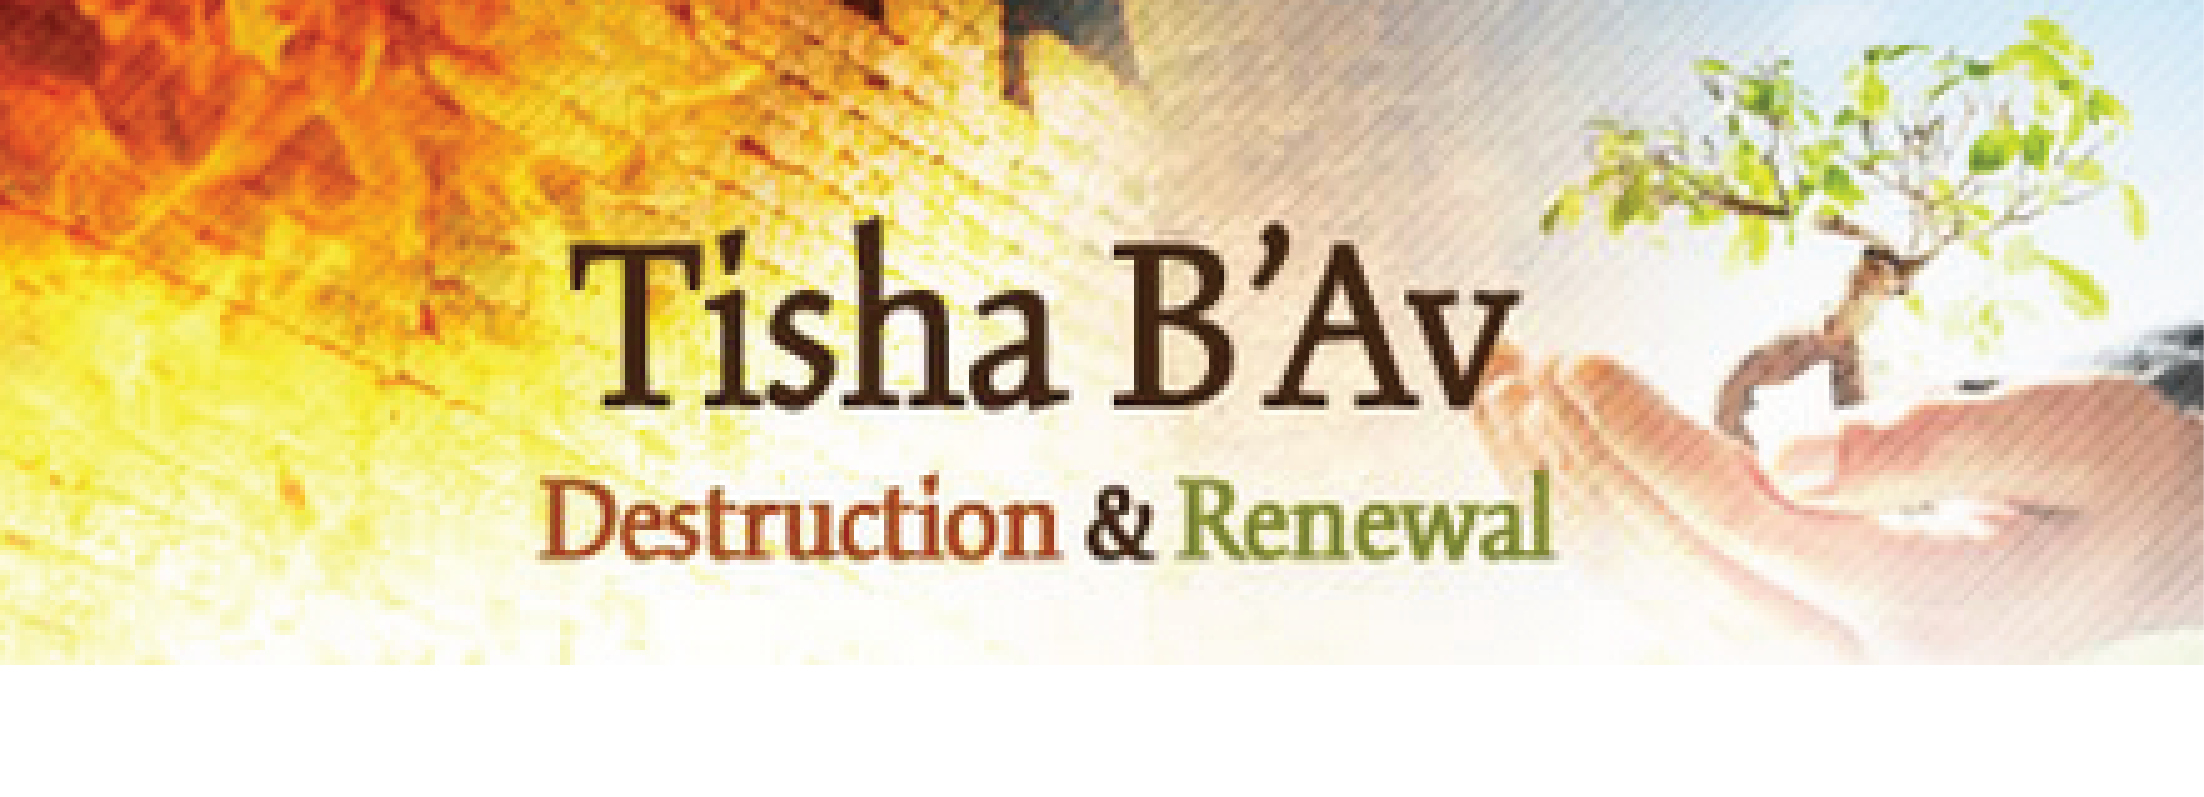 Tisha B'Av Schedule Chabad Jewish Center of Oakland